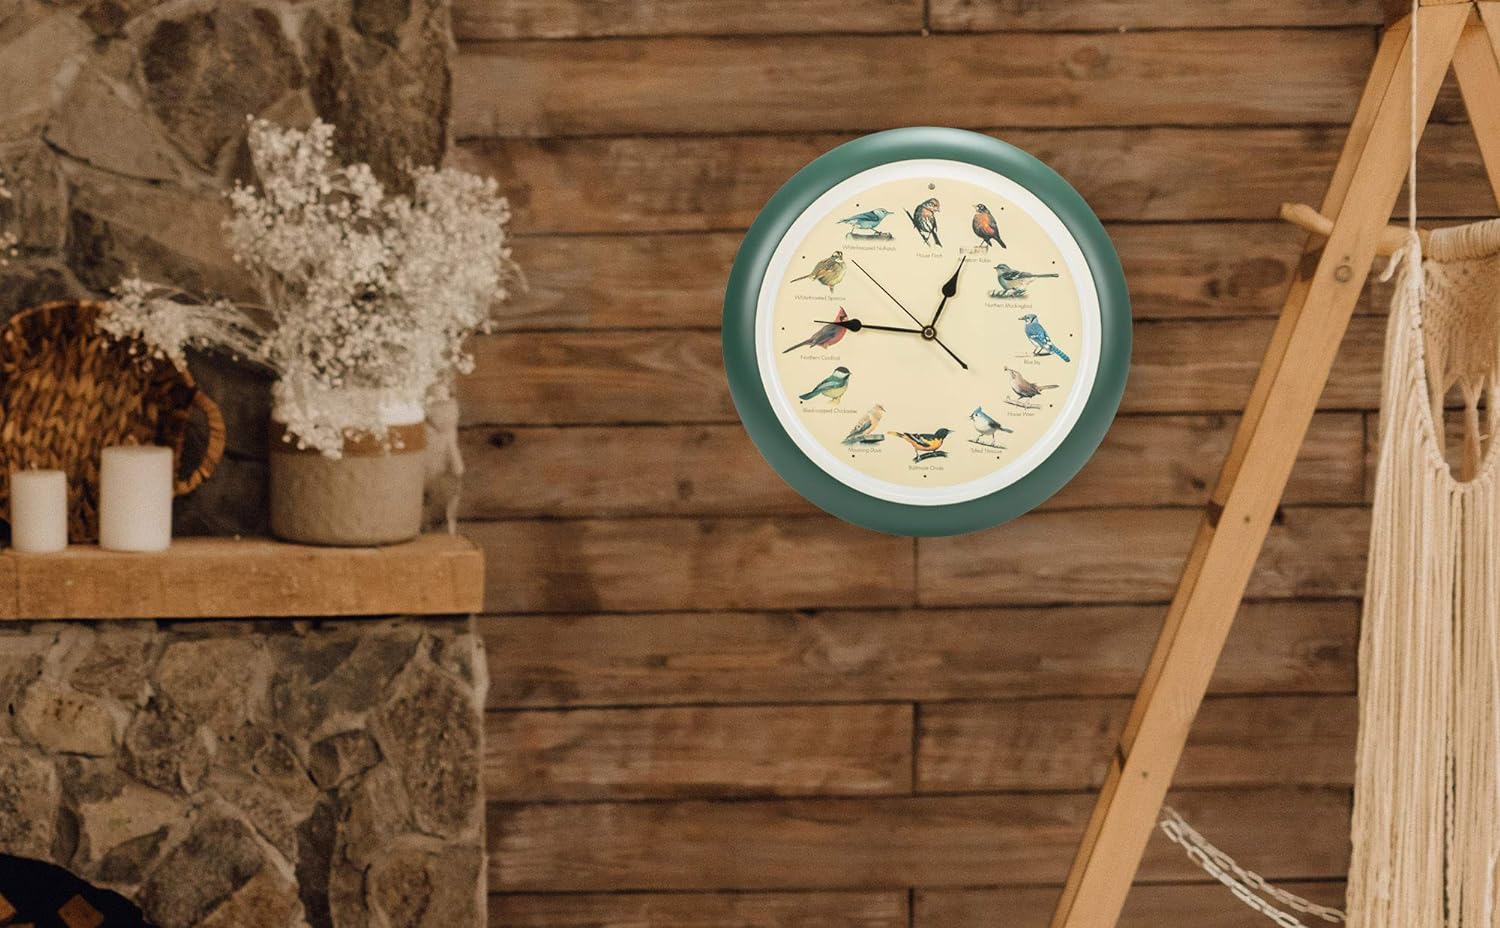 Mark Feldstein and Associates Original Singing Bird Wall Clock, 13 Inch (Green)